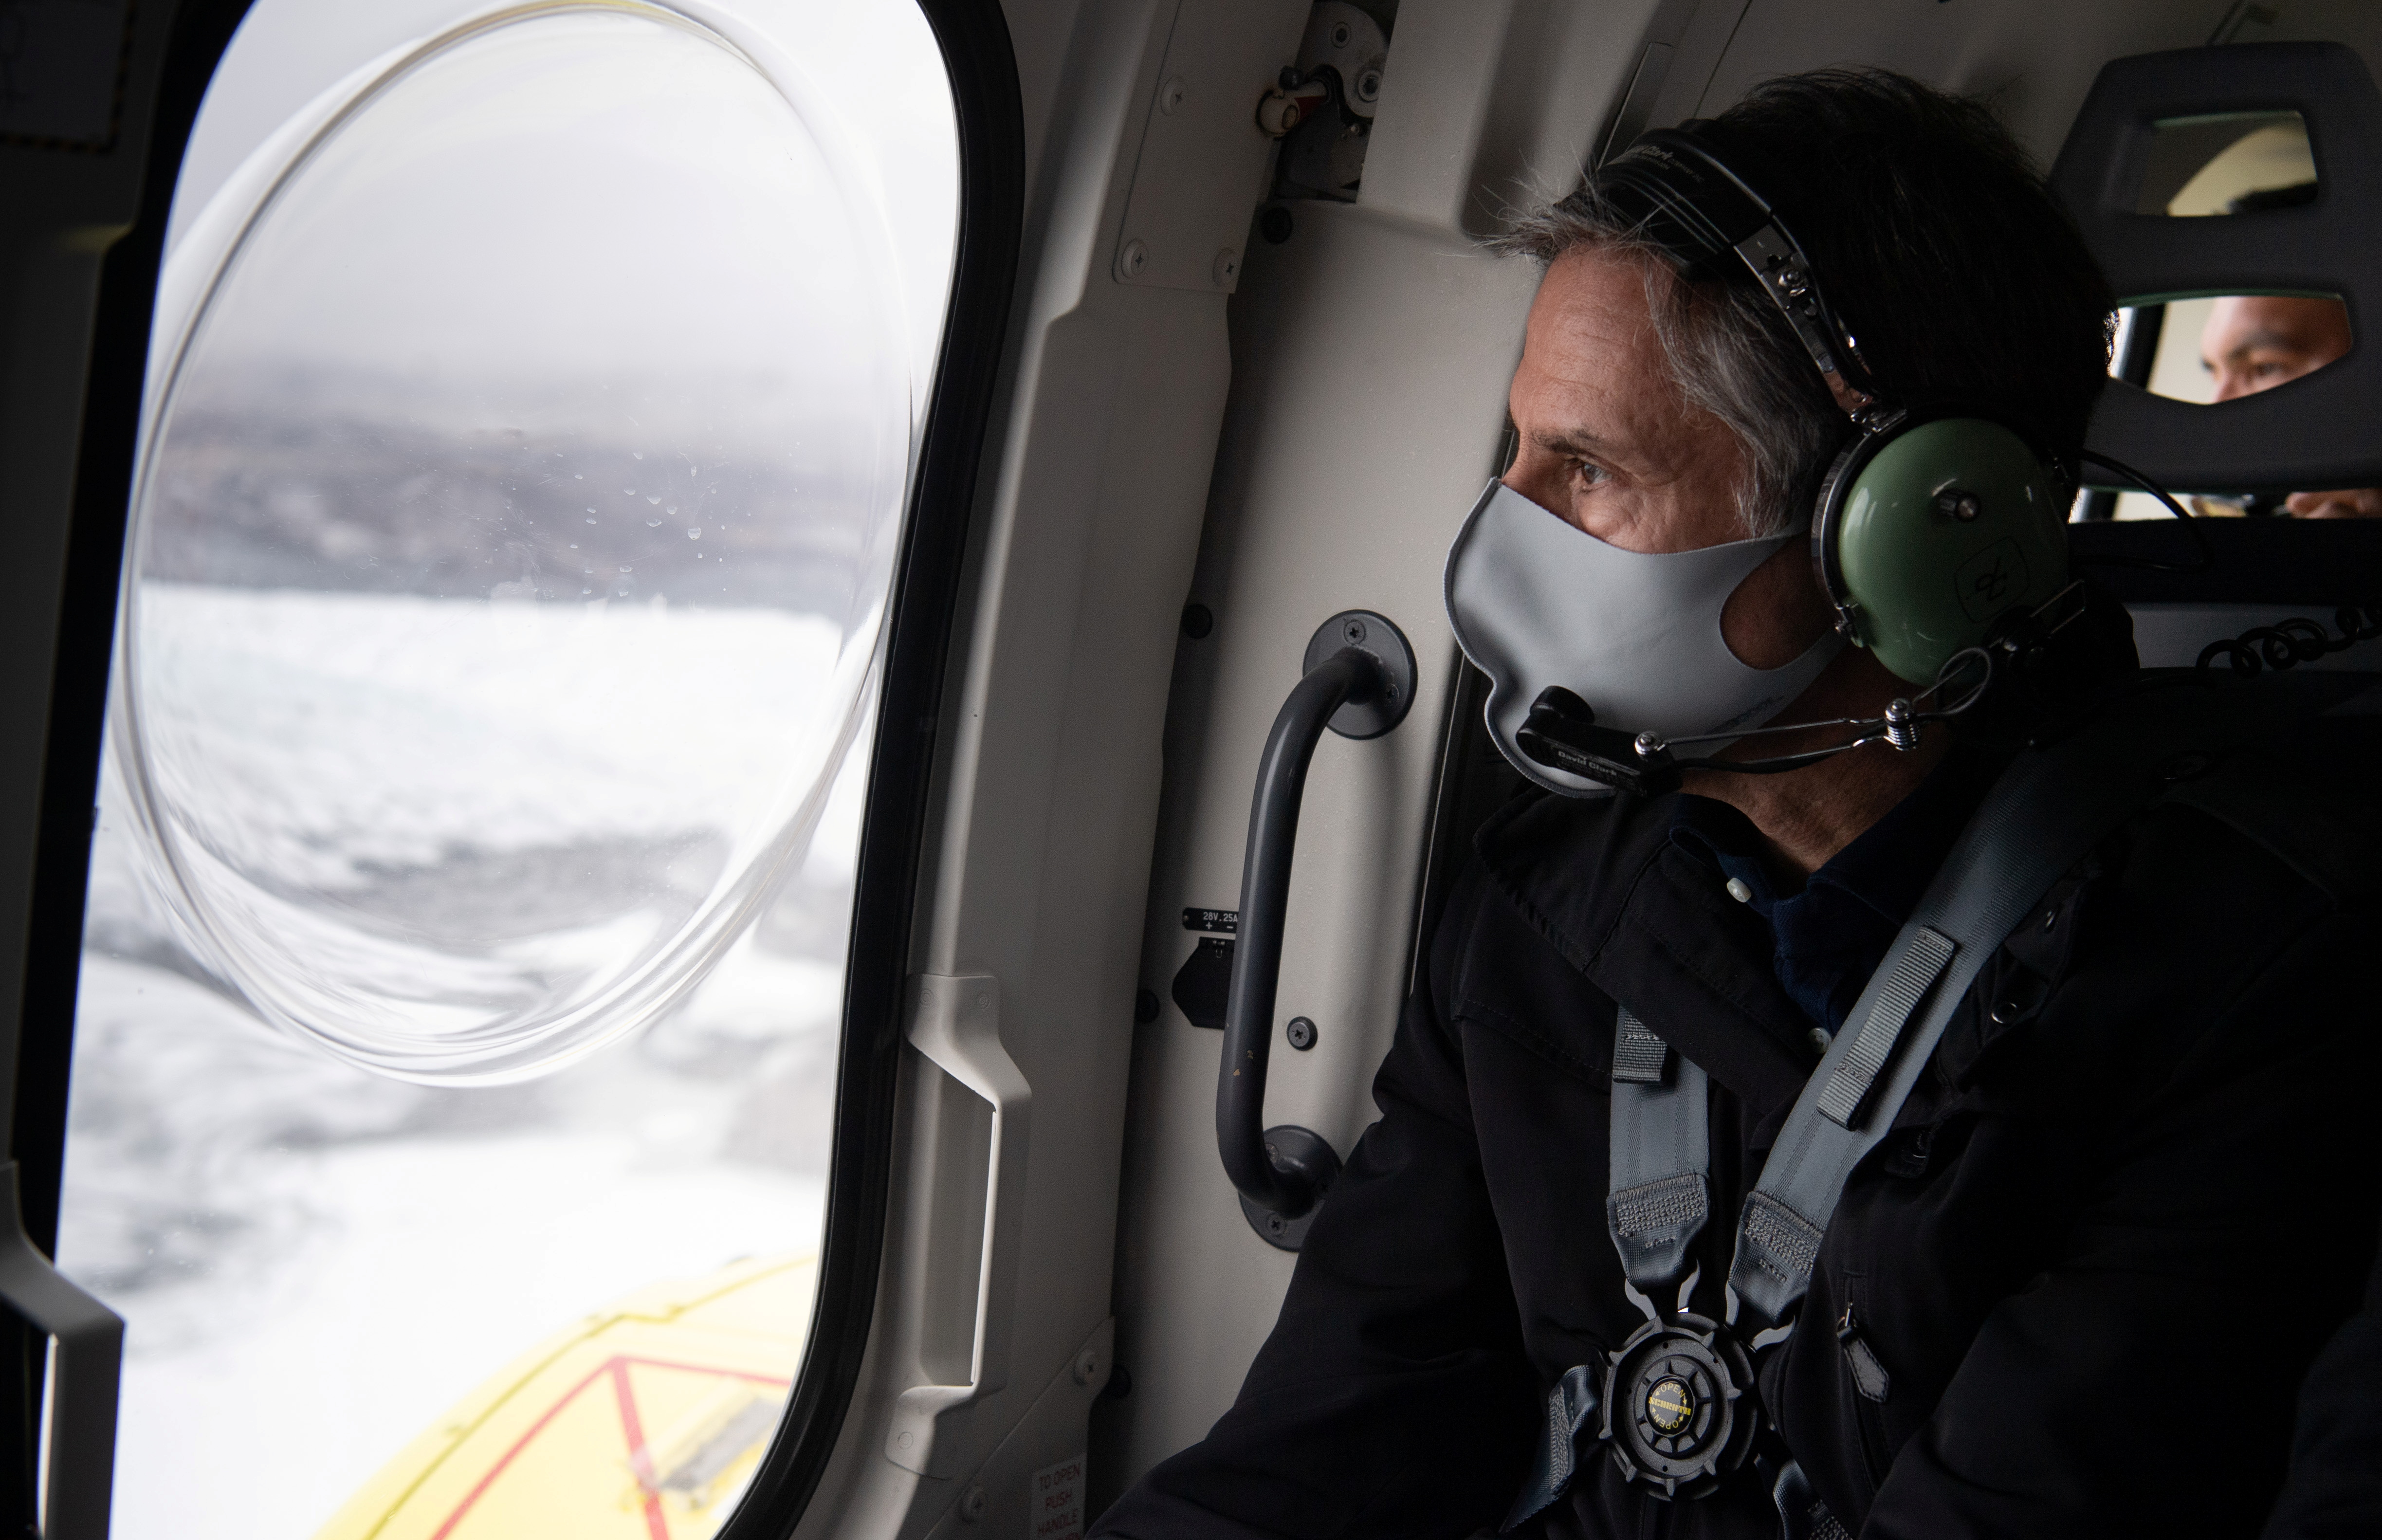 U.S. Secretary of State Antony Blinken flies in a helicopter as he takes an aerial tour near Kangerlussuaq